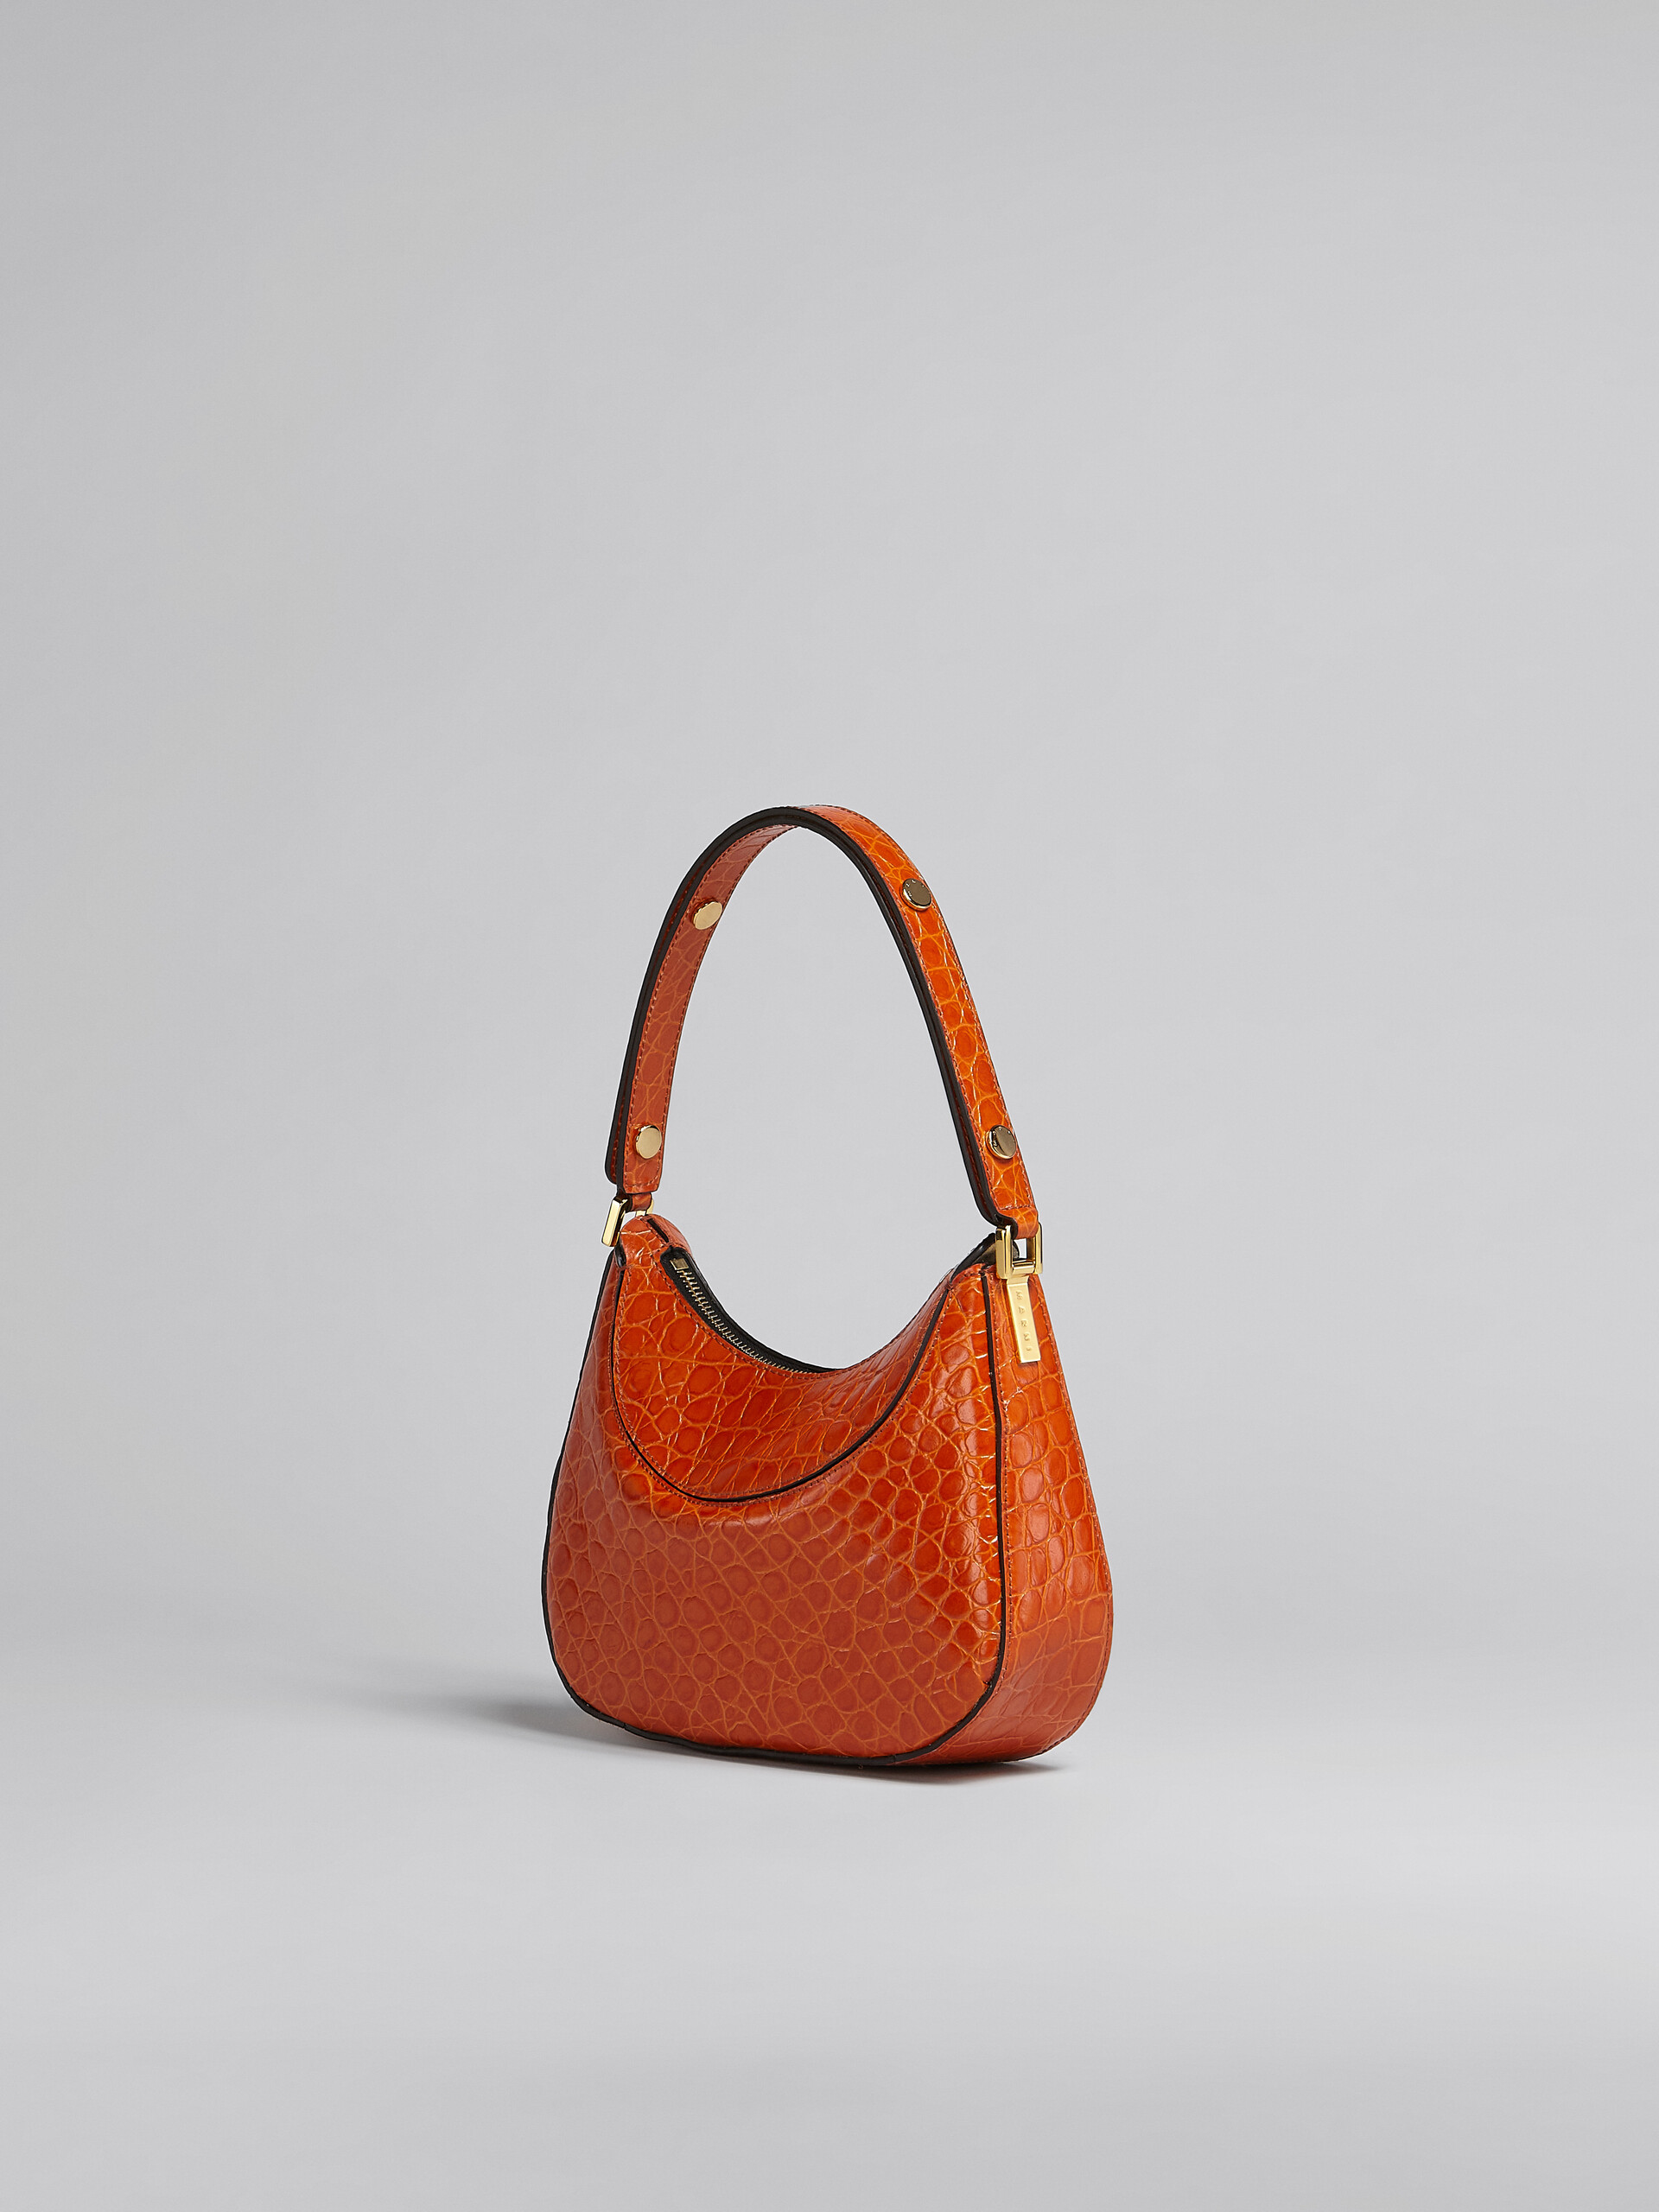 Milano Mini Bag in orange croco print leather - Handbag - Image 3